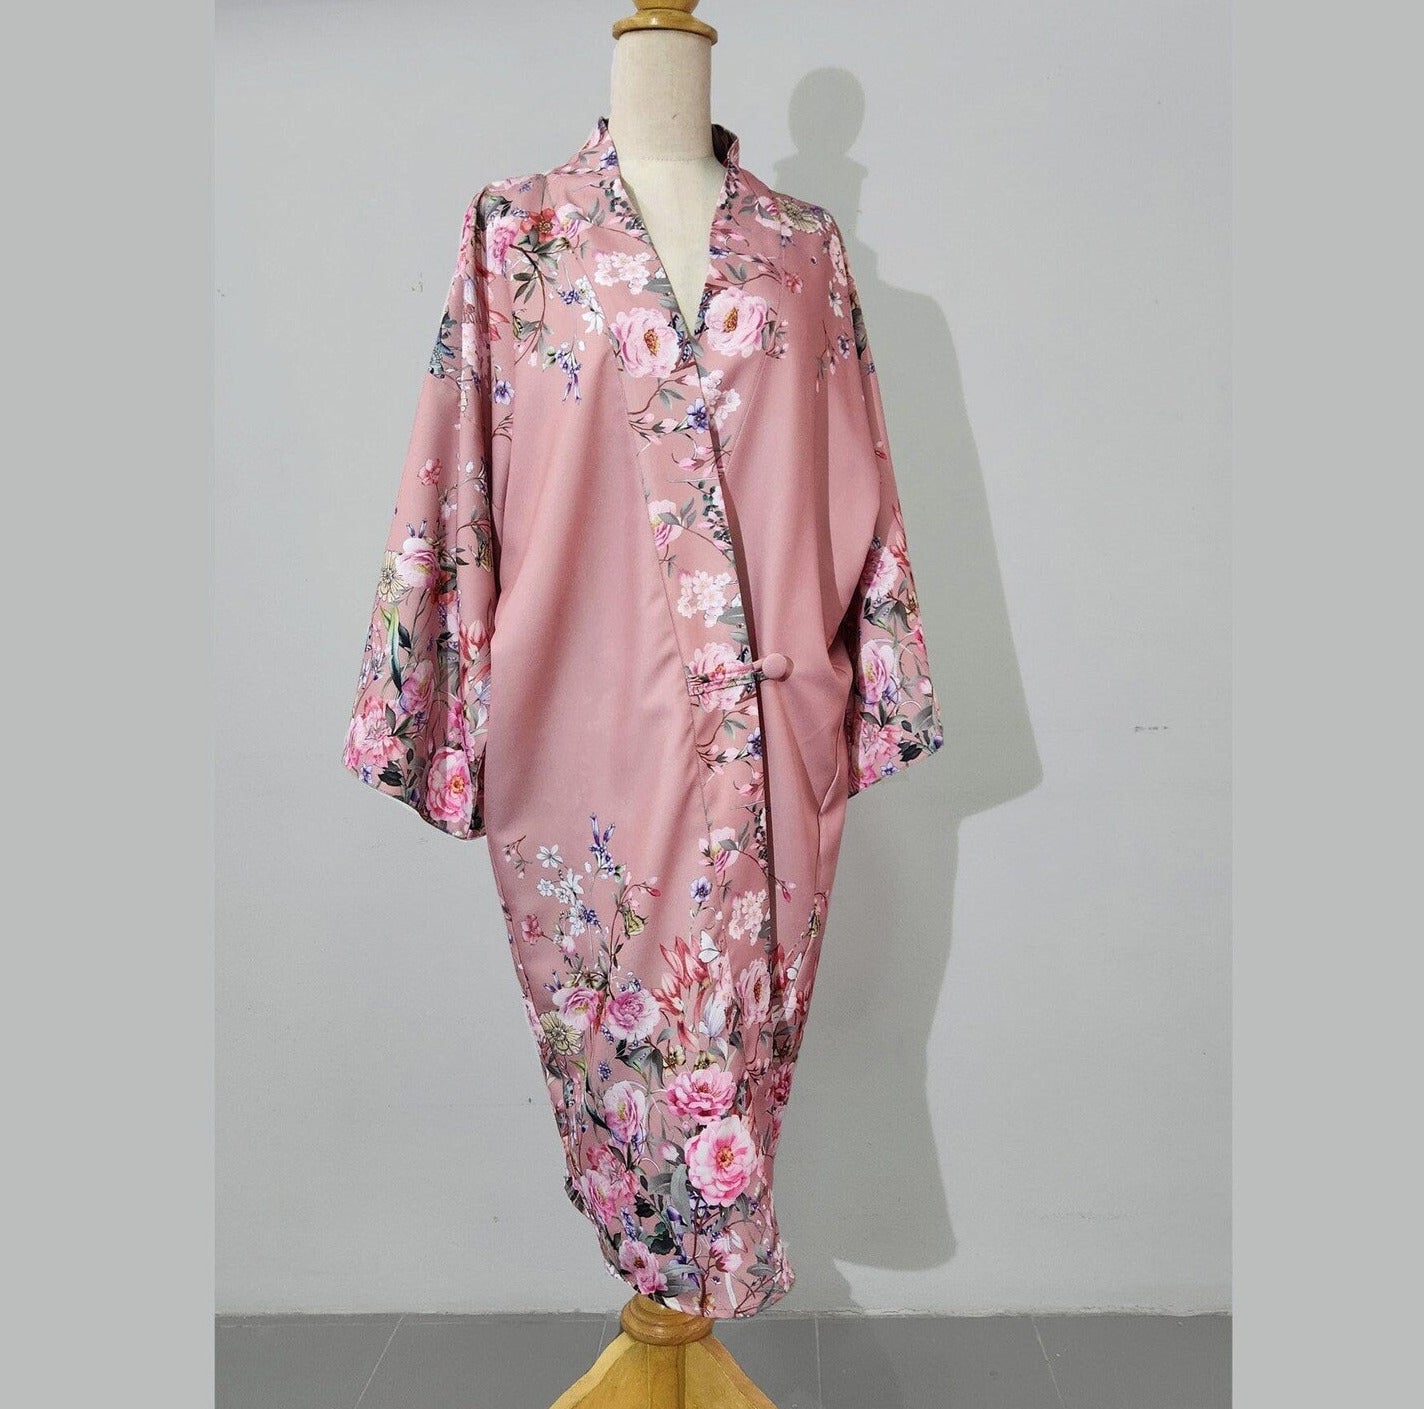 Mauve pink kimono robe, inspired by 1920s-inspired loungewear, a Japanese-style 1920s kimono